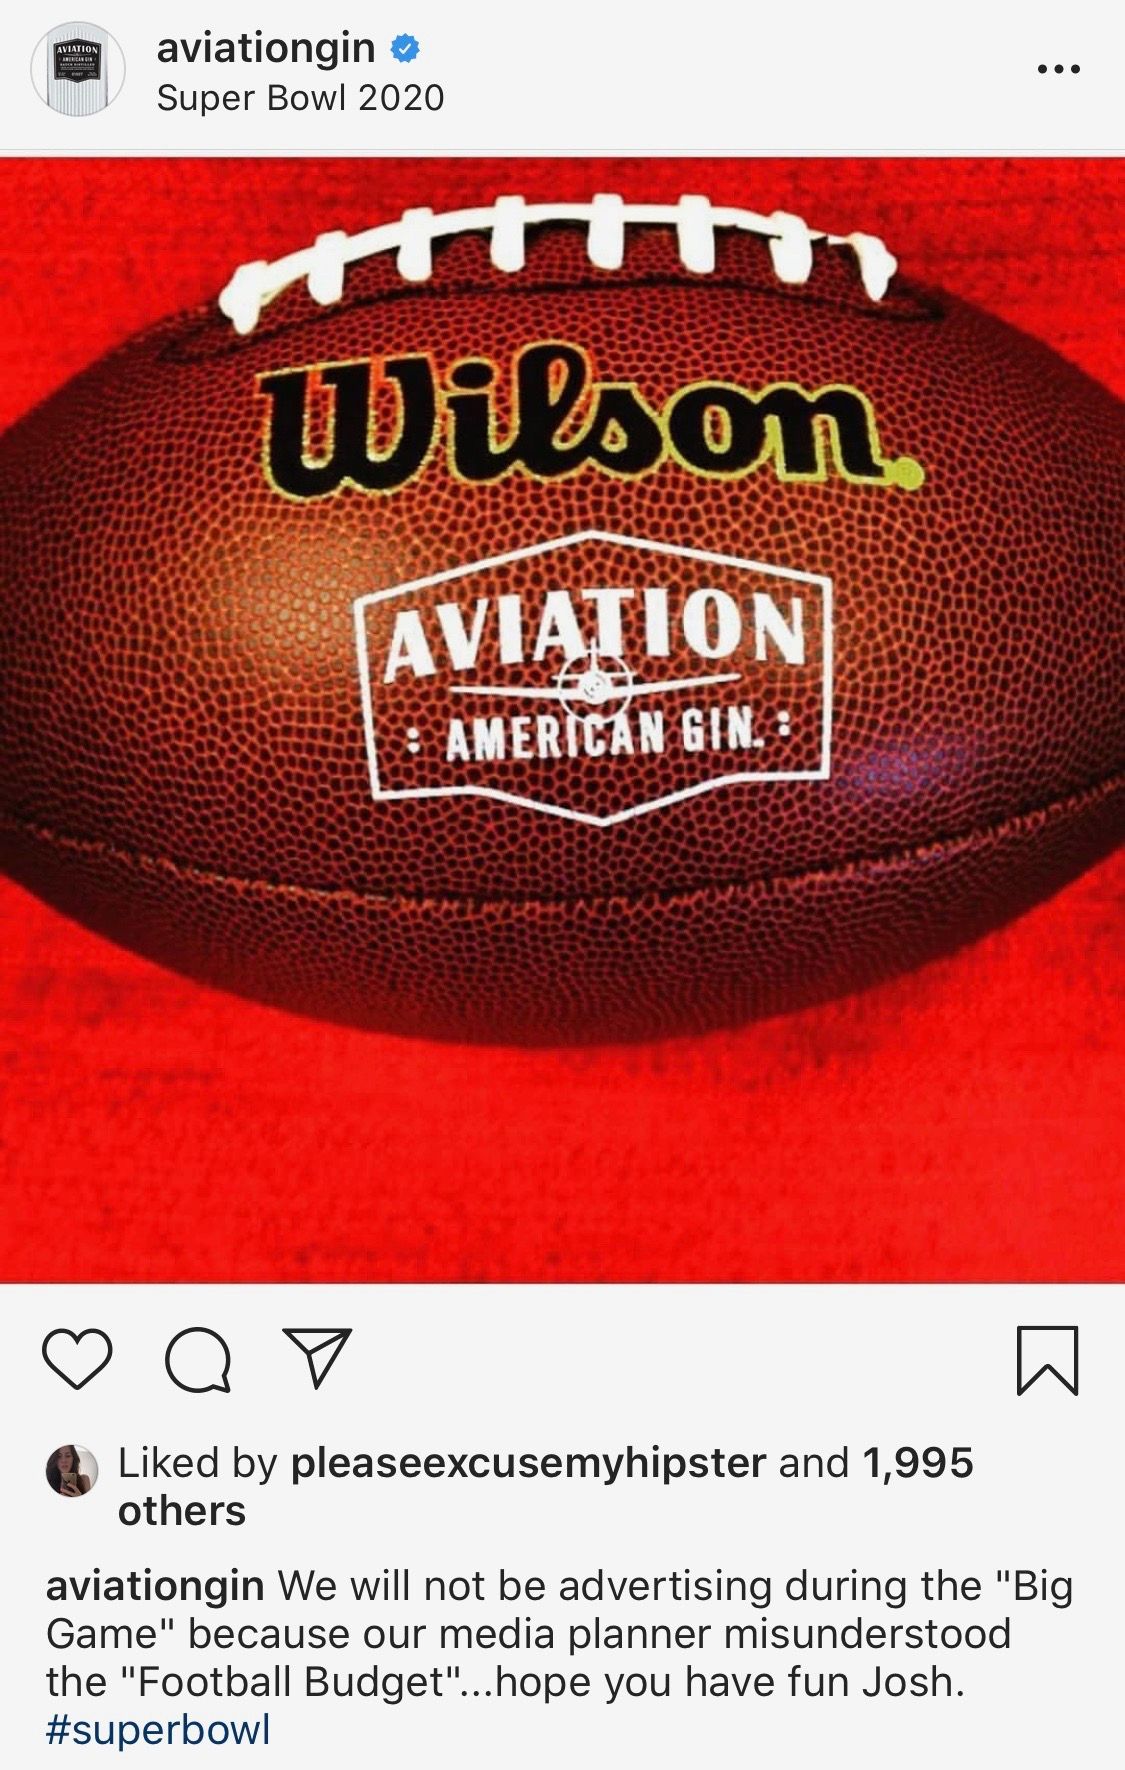 @aviationgin Instagram post